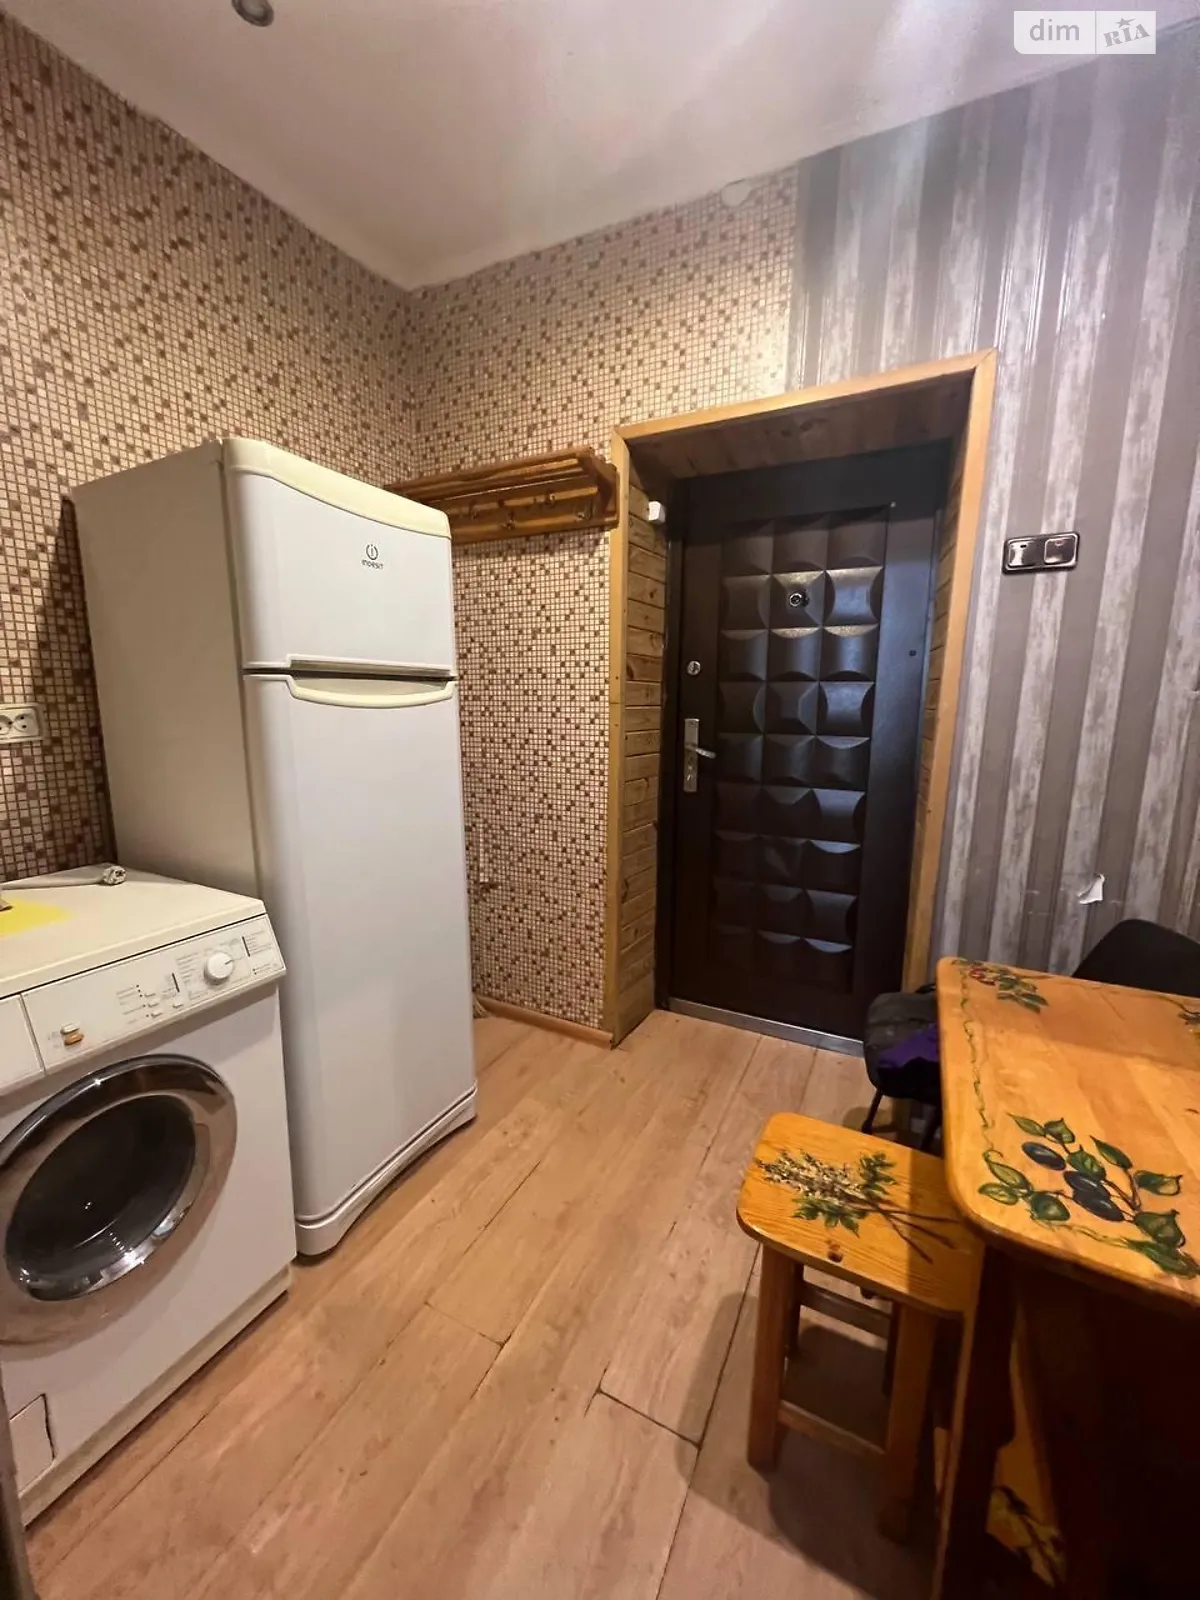 Продается комната 80 кв. м в Одессе, цена: 8900 $ - фото 1